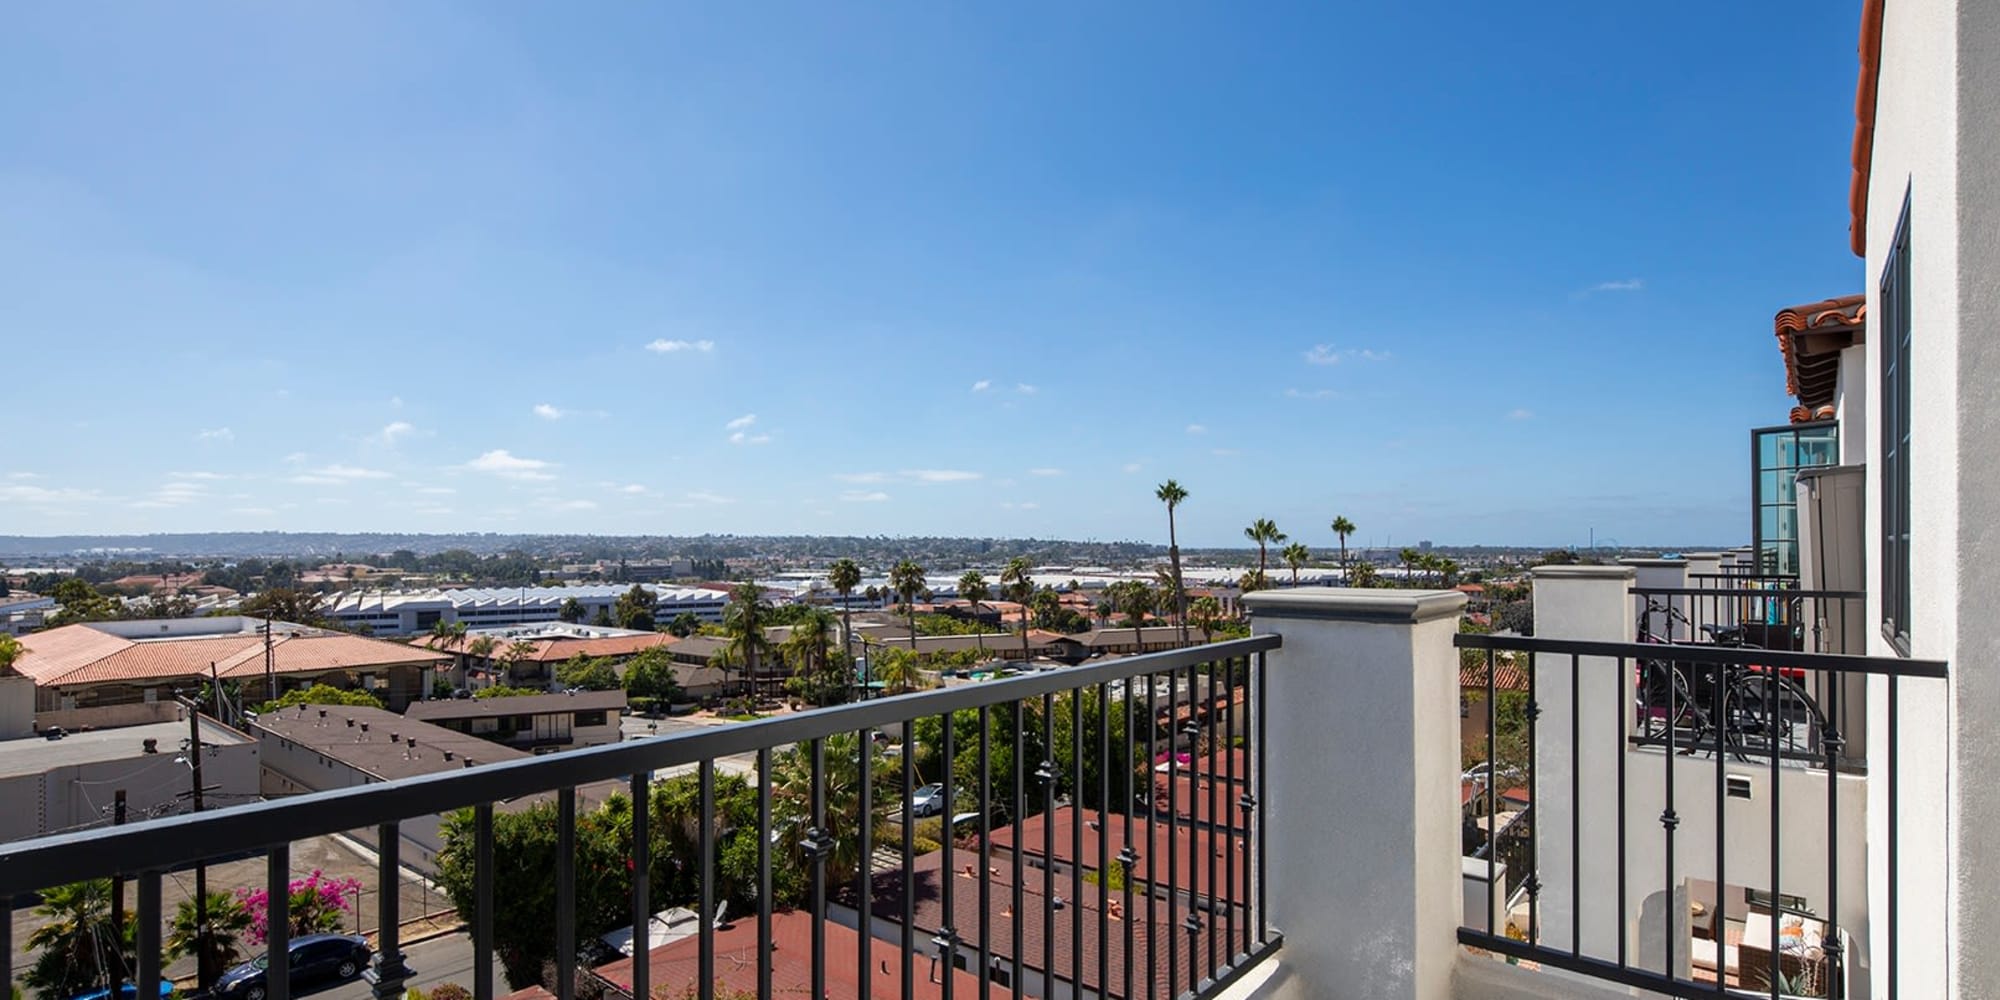 Beautiful views form Mission West Lofts in San Diego, California